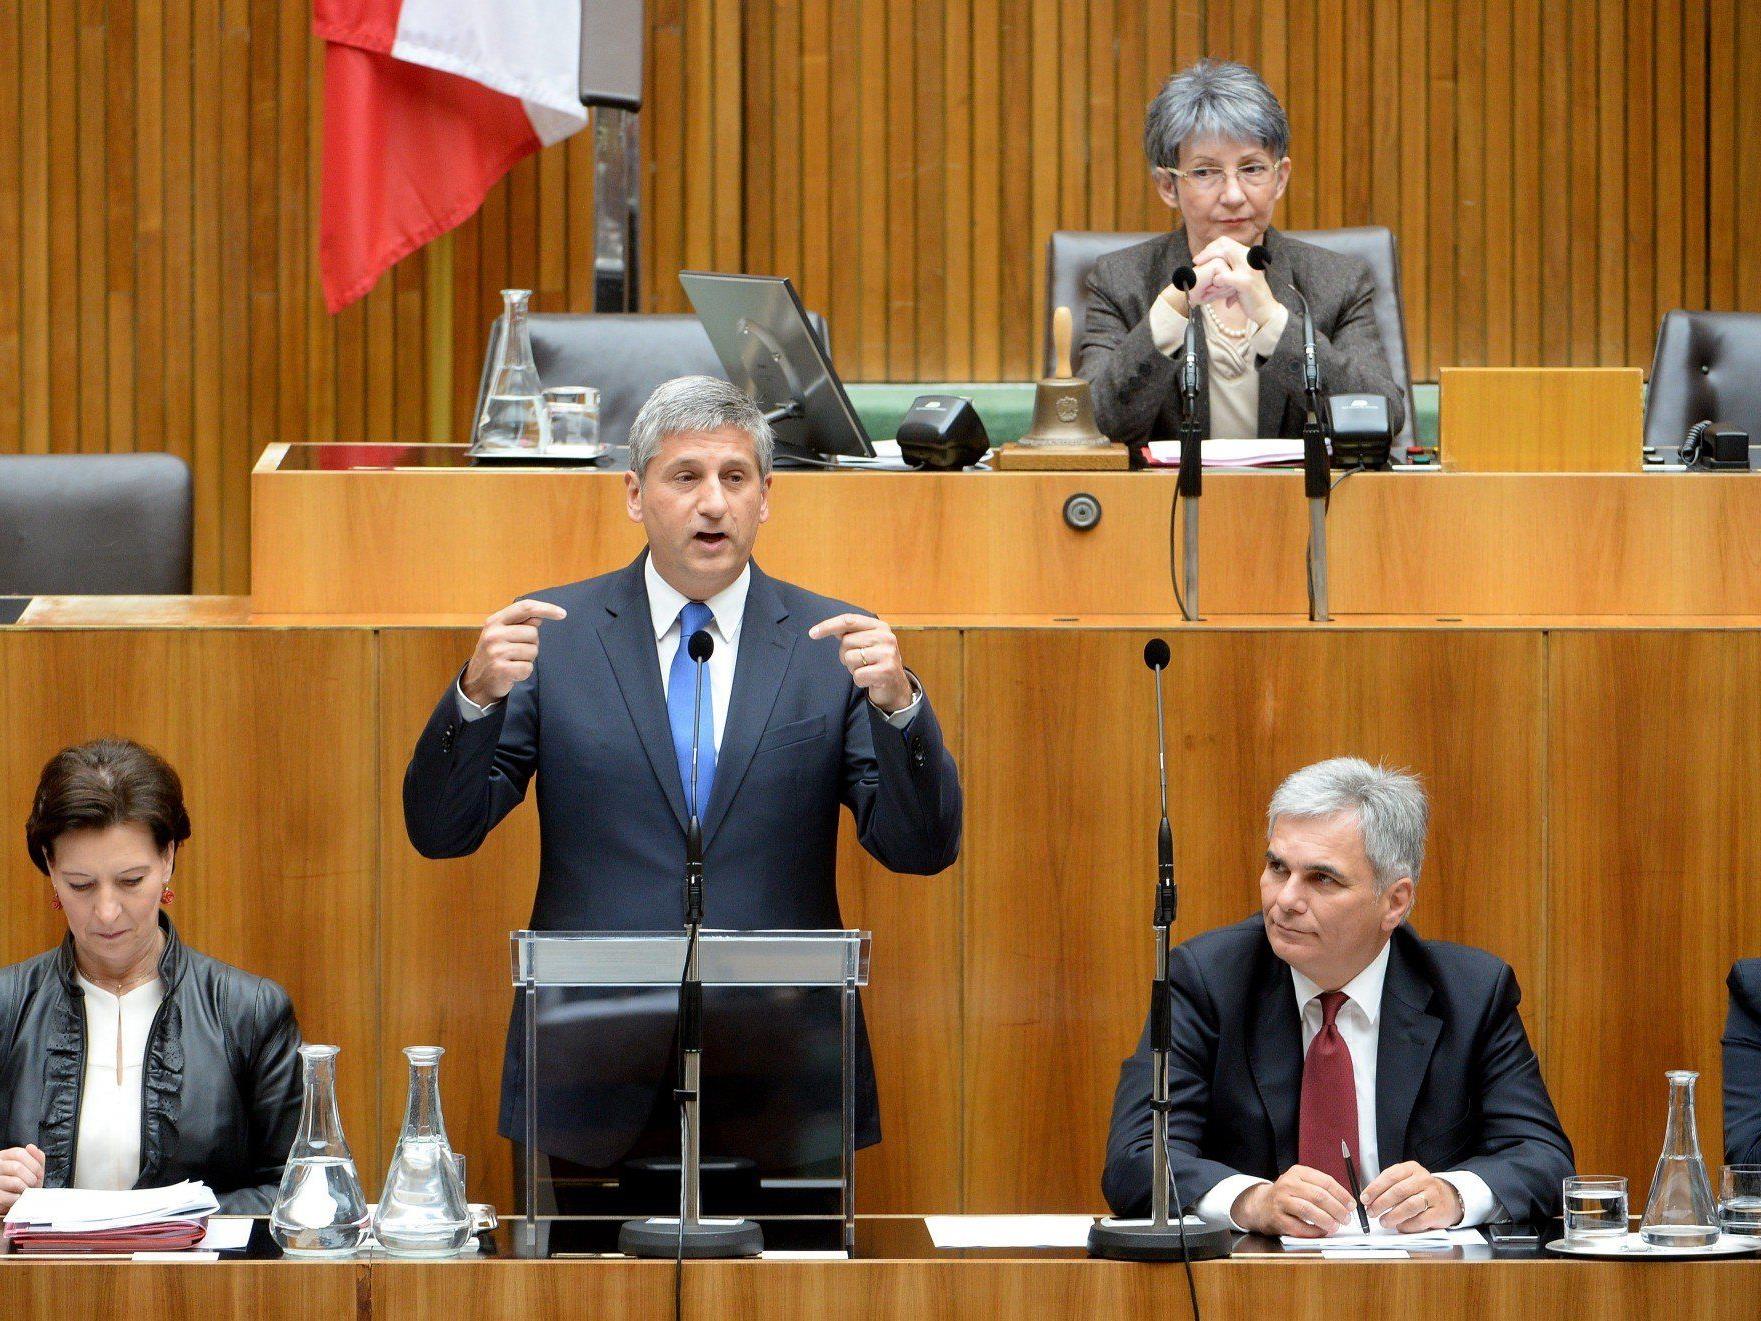 Finanzminister hielt erste Budgetrede zu Doppelbudget 2014/15.